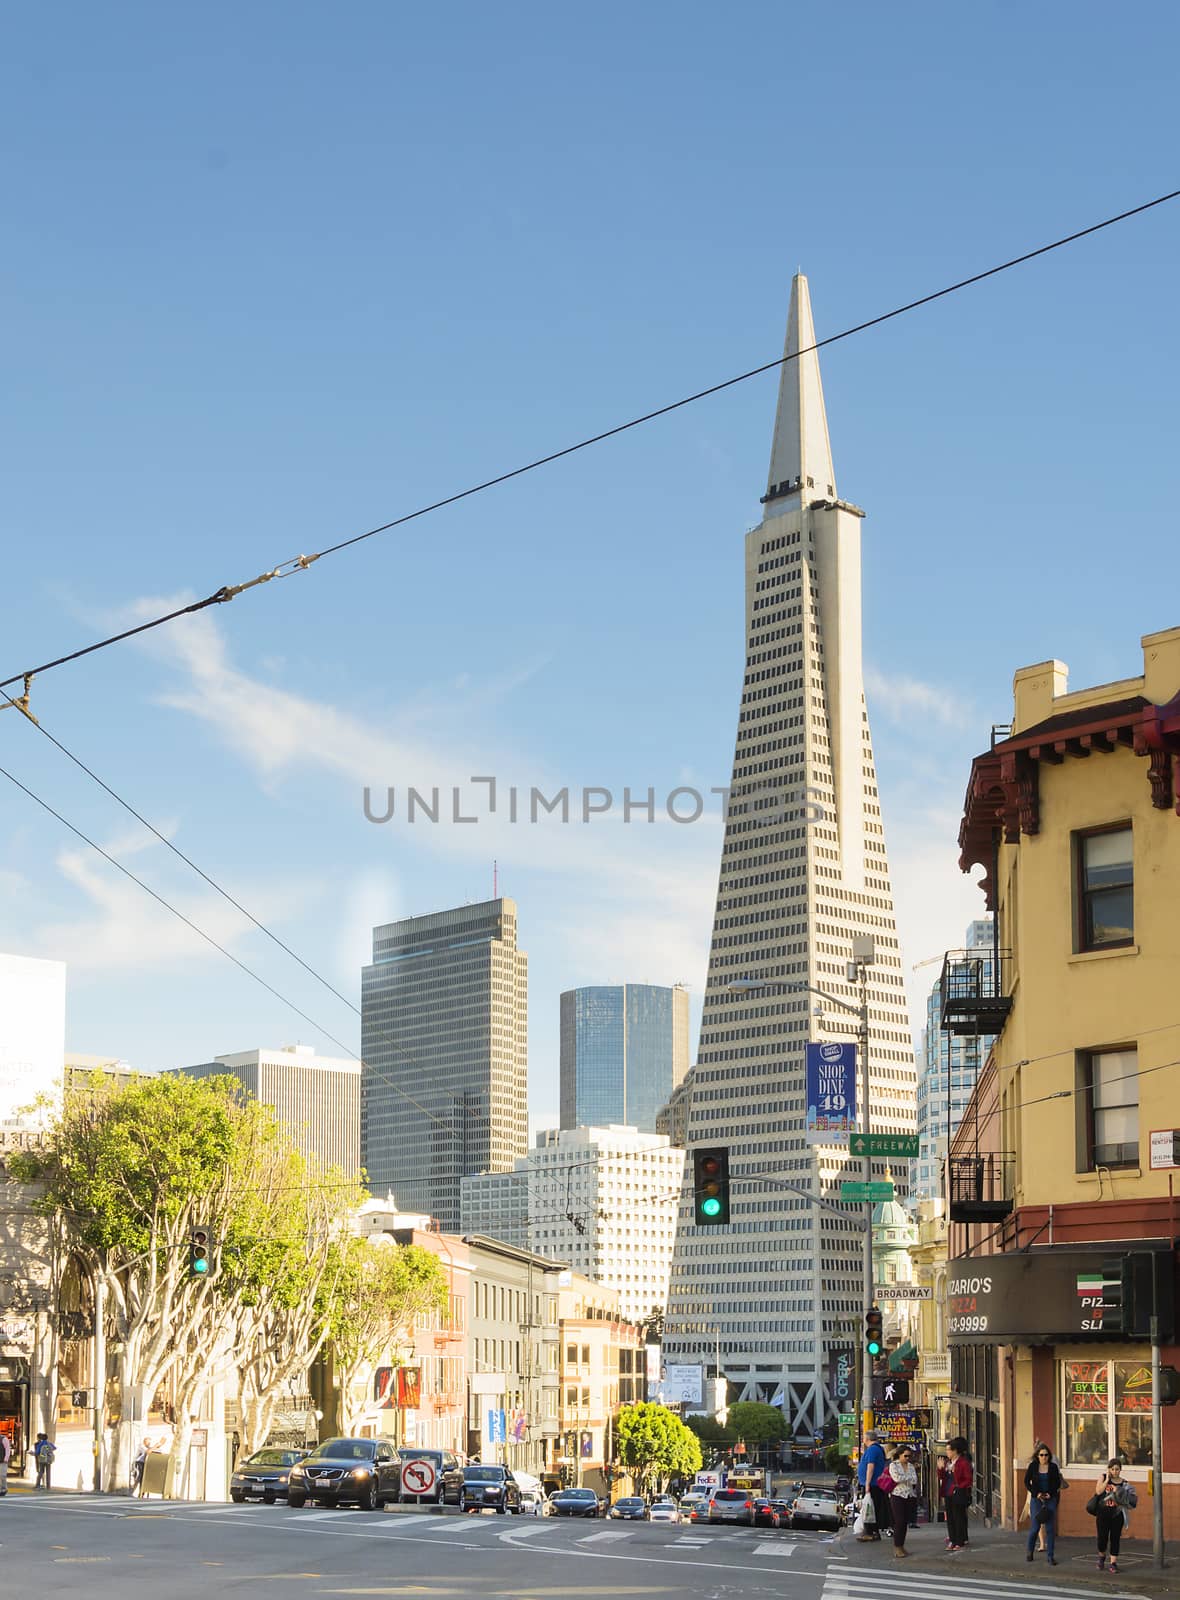 San Francisco, CA, USA, october 23, 2016: Transamerica building with its pyramid shape in San Francisco